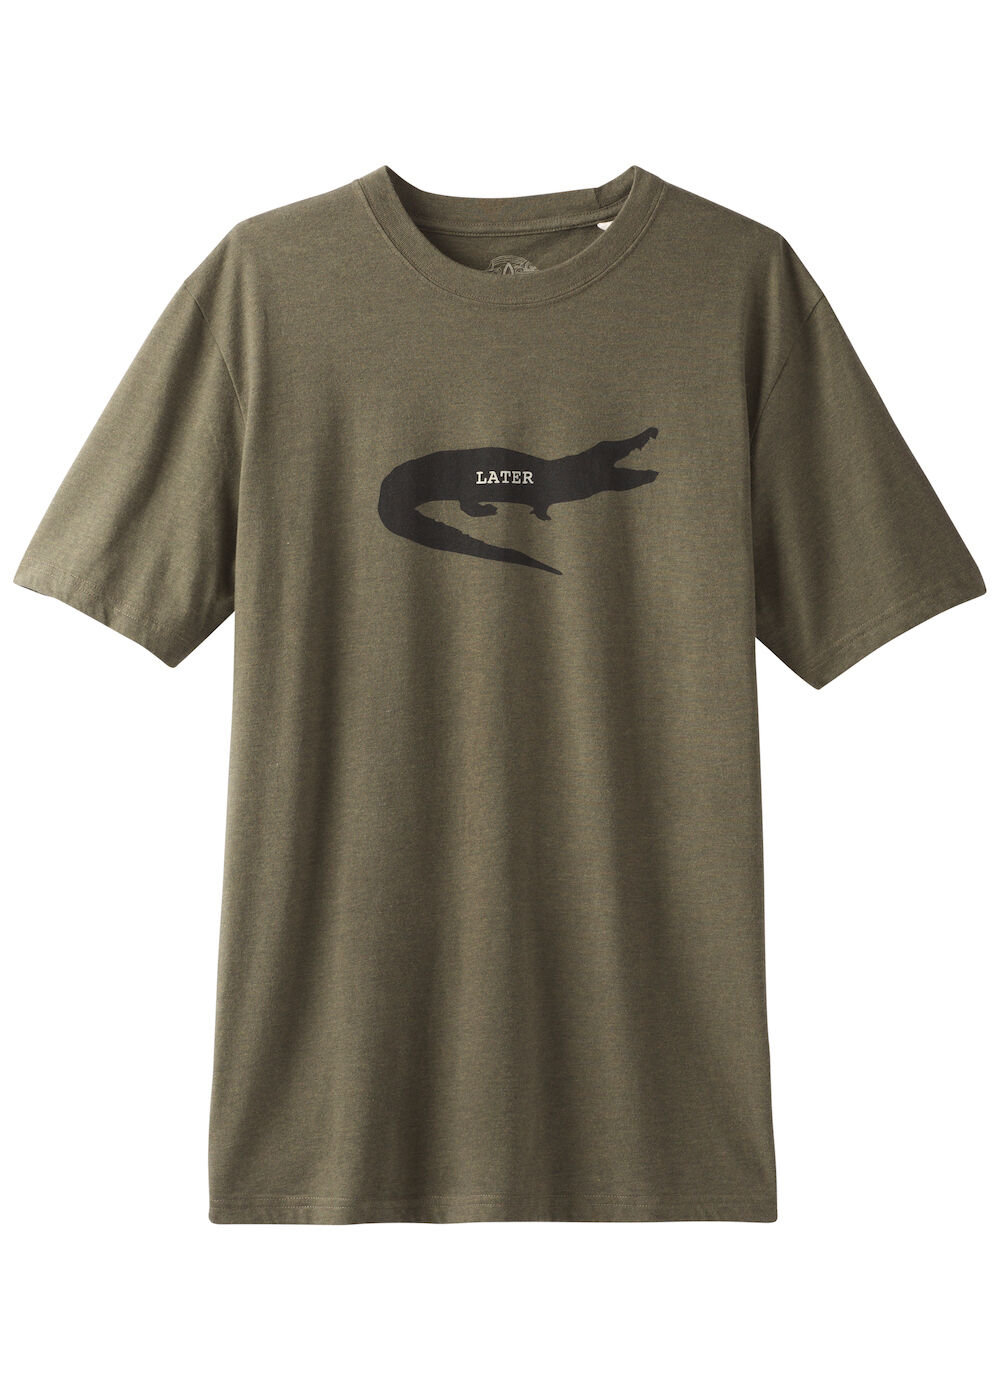 Prana Later Gator Journeyman - T-shirt Herr